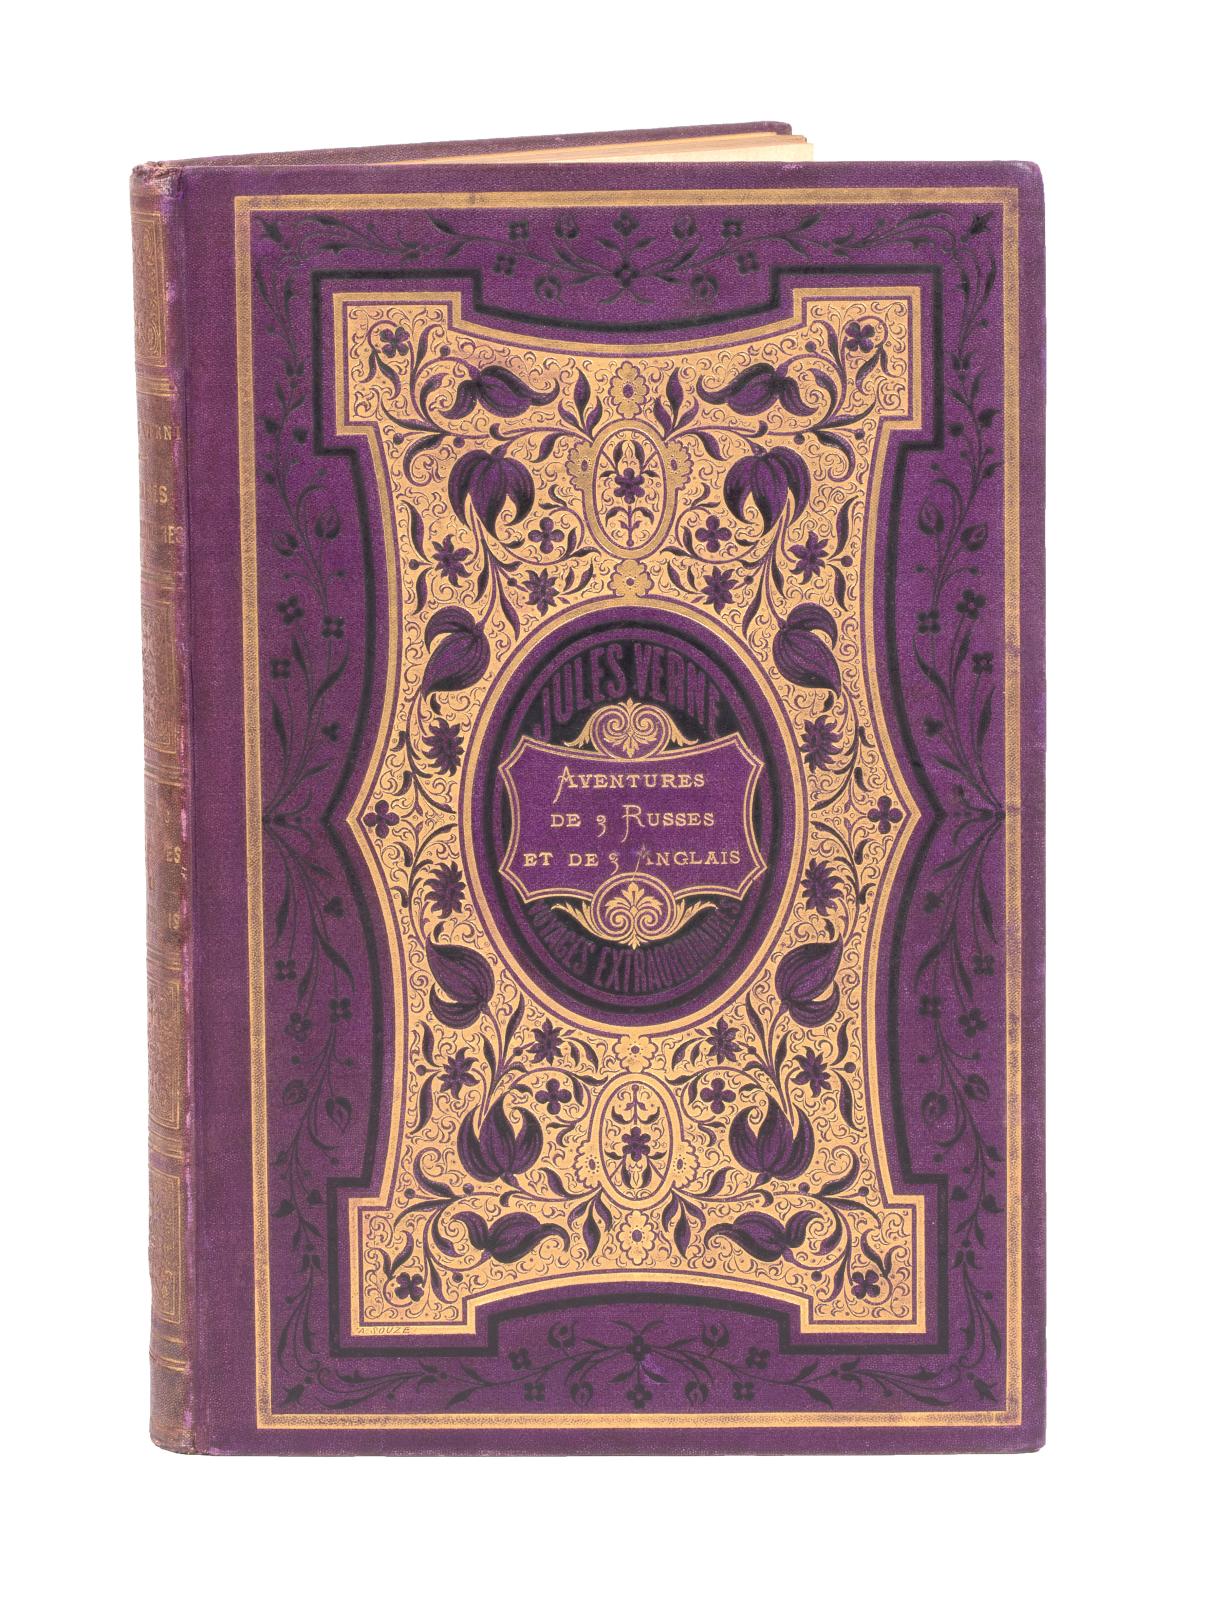 Jules Verne, une collection extraordinaire